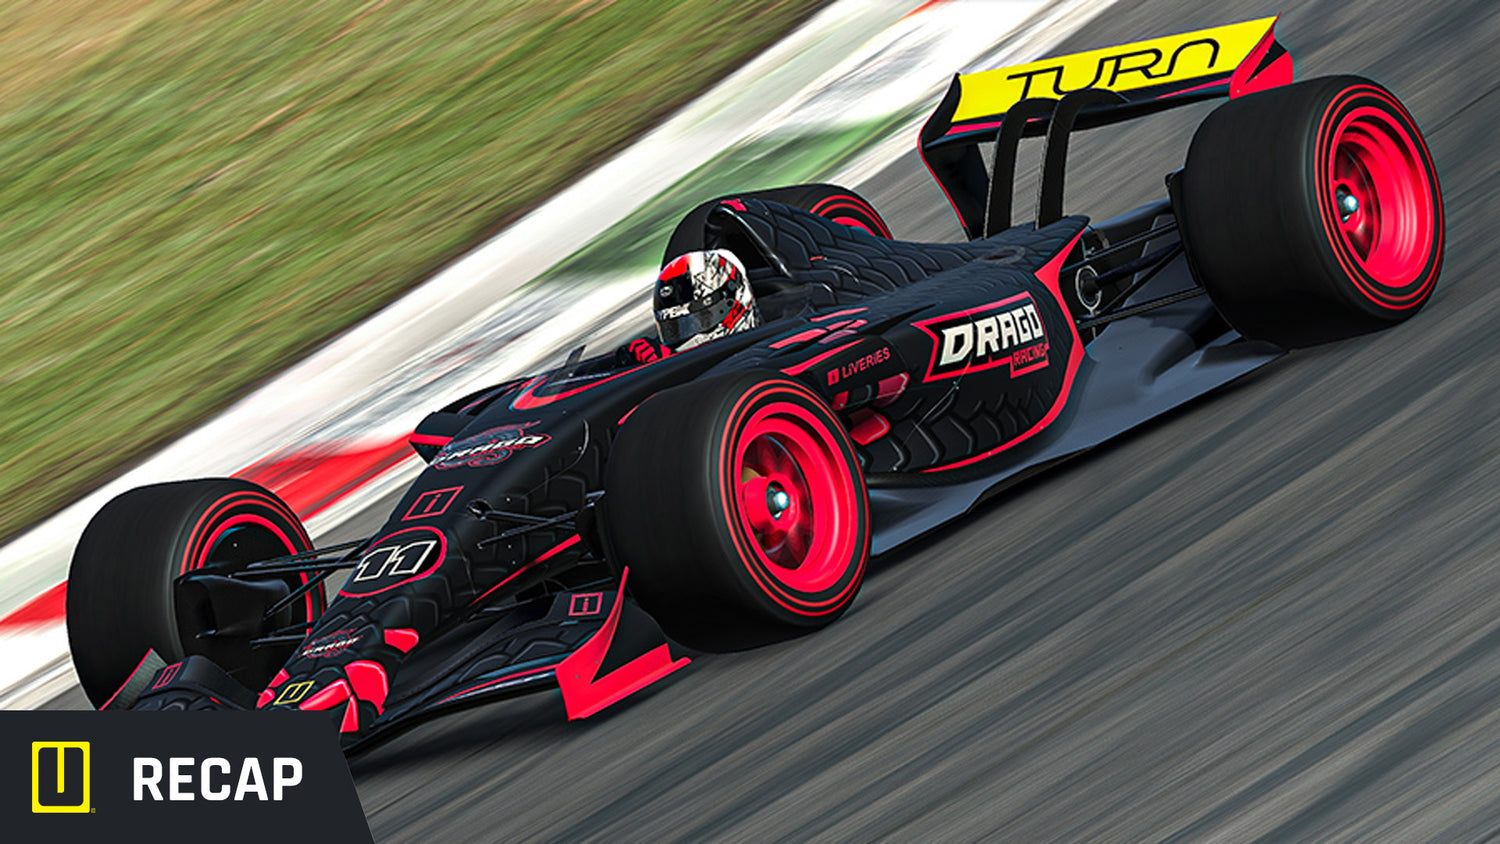 Grand Prix Turn Racing iRacing Series Race 10 Recap